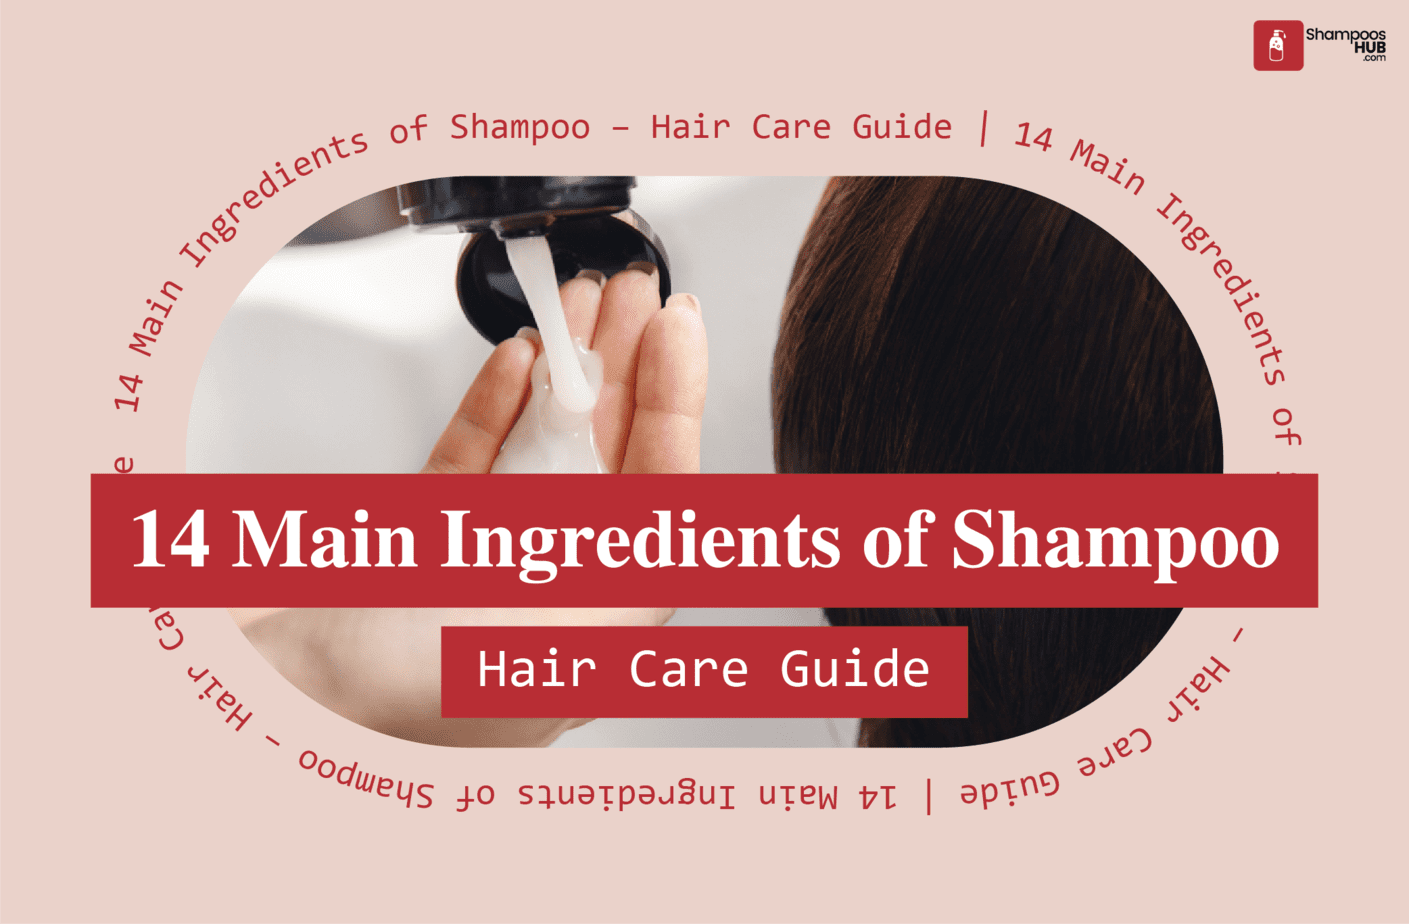 14 Main Ingredients of Shampoo